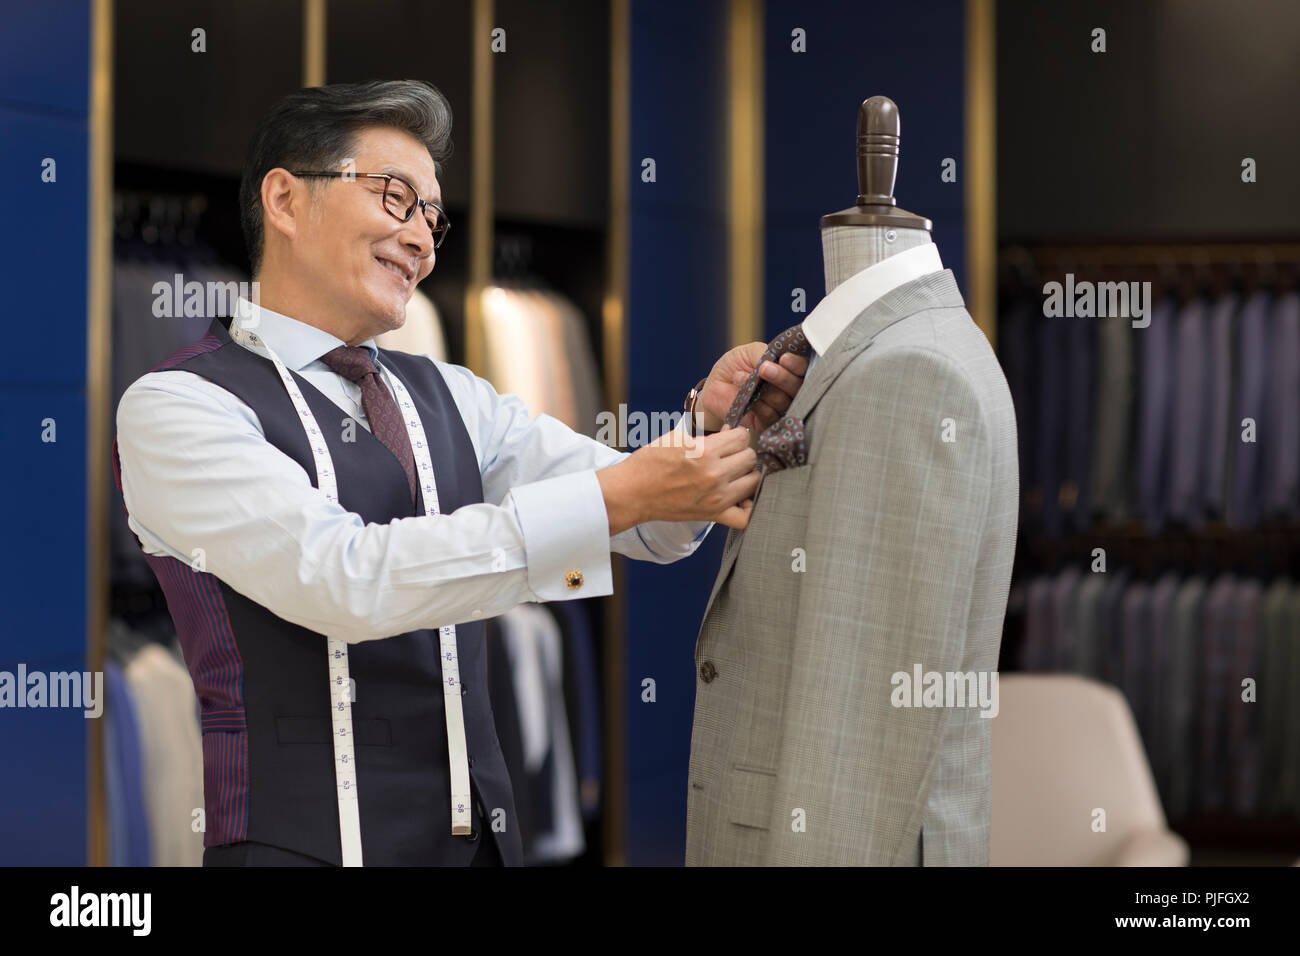 Confident fashion designer working Stock Photo - Alamy